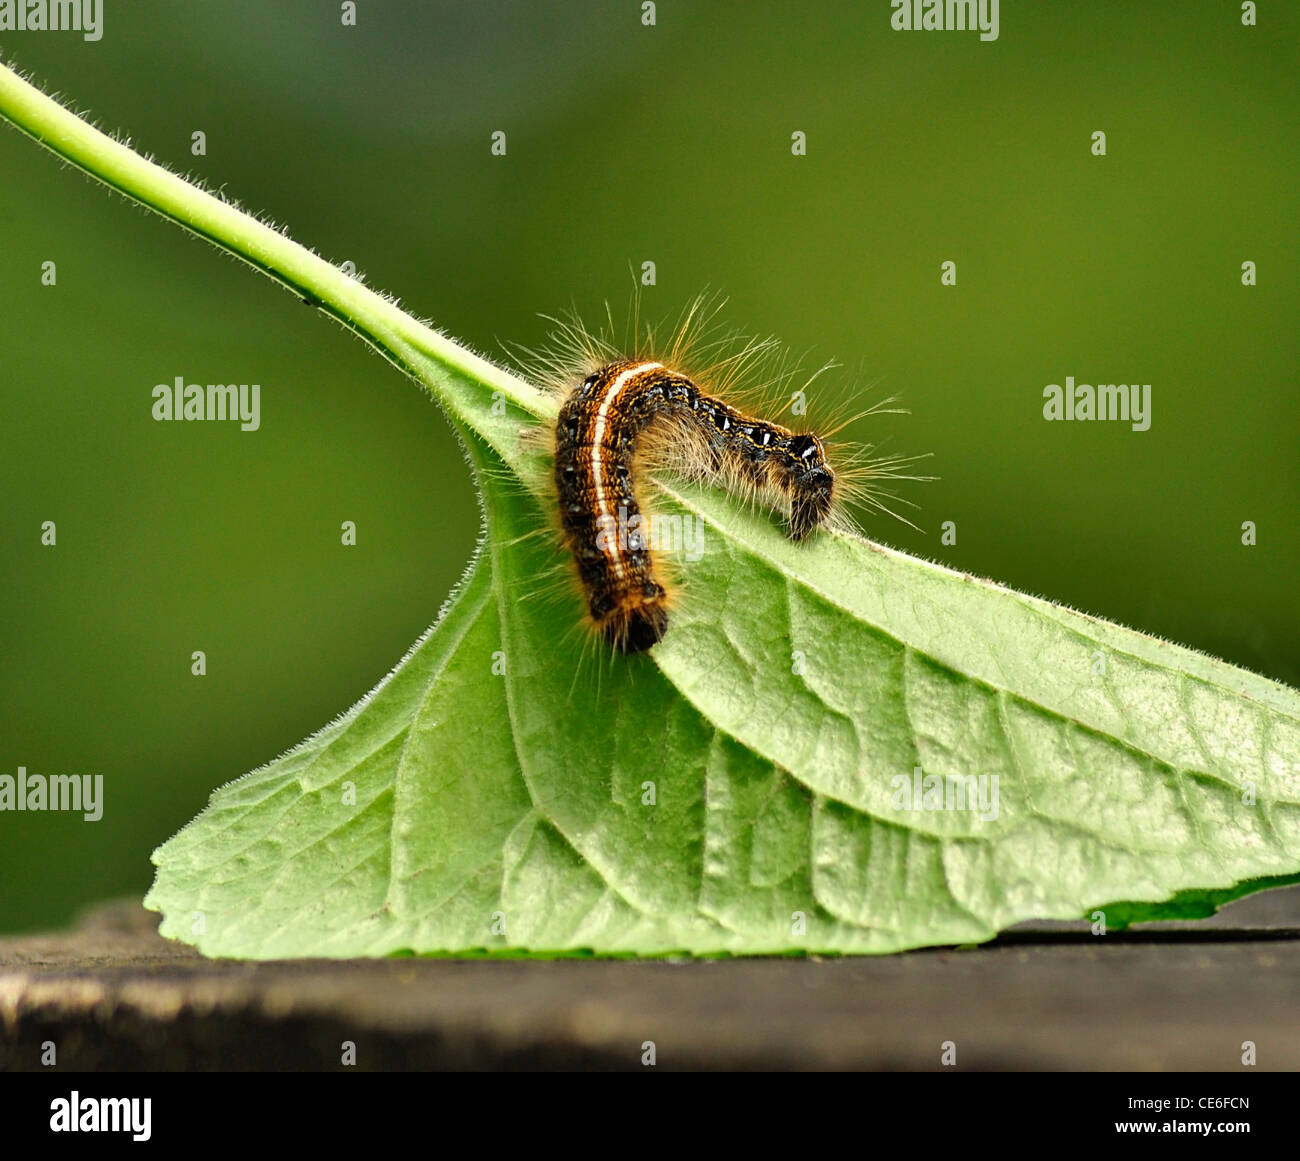 Black Caterpillar With Long Hair Stock Photo 43169749 Alamy